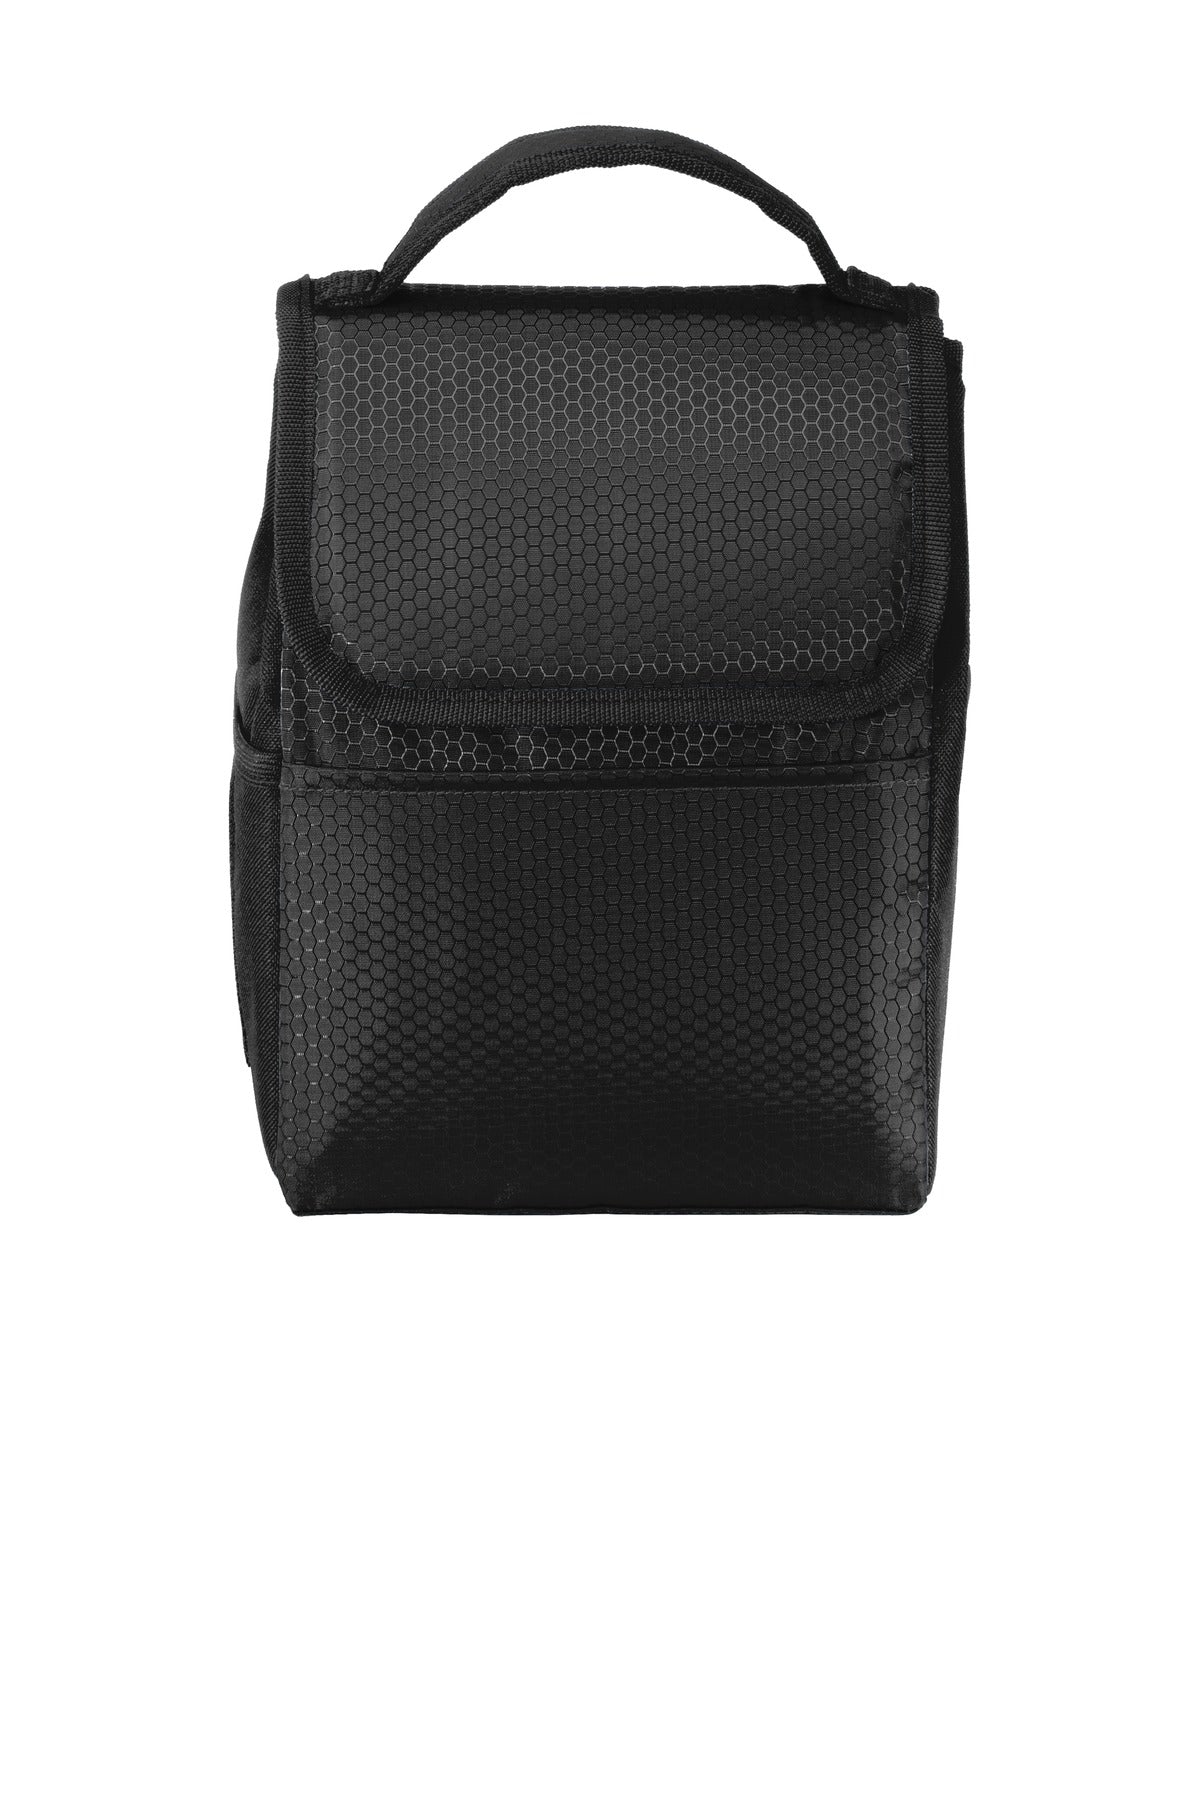 Port Authority® Lunch Bag Cooler. BG500 - DFW Impression